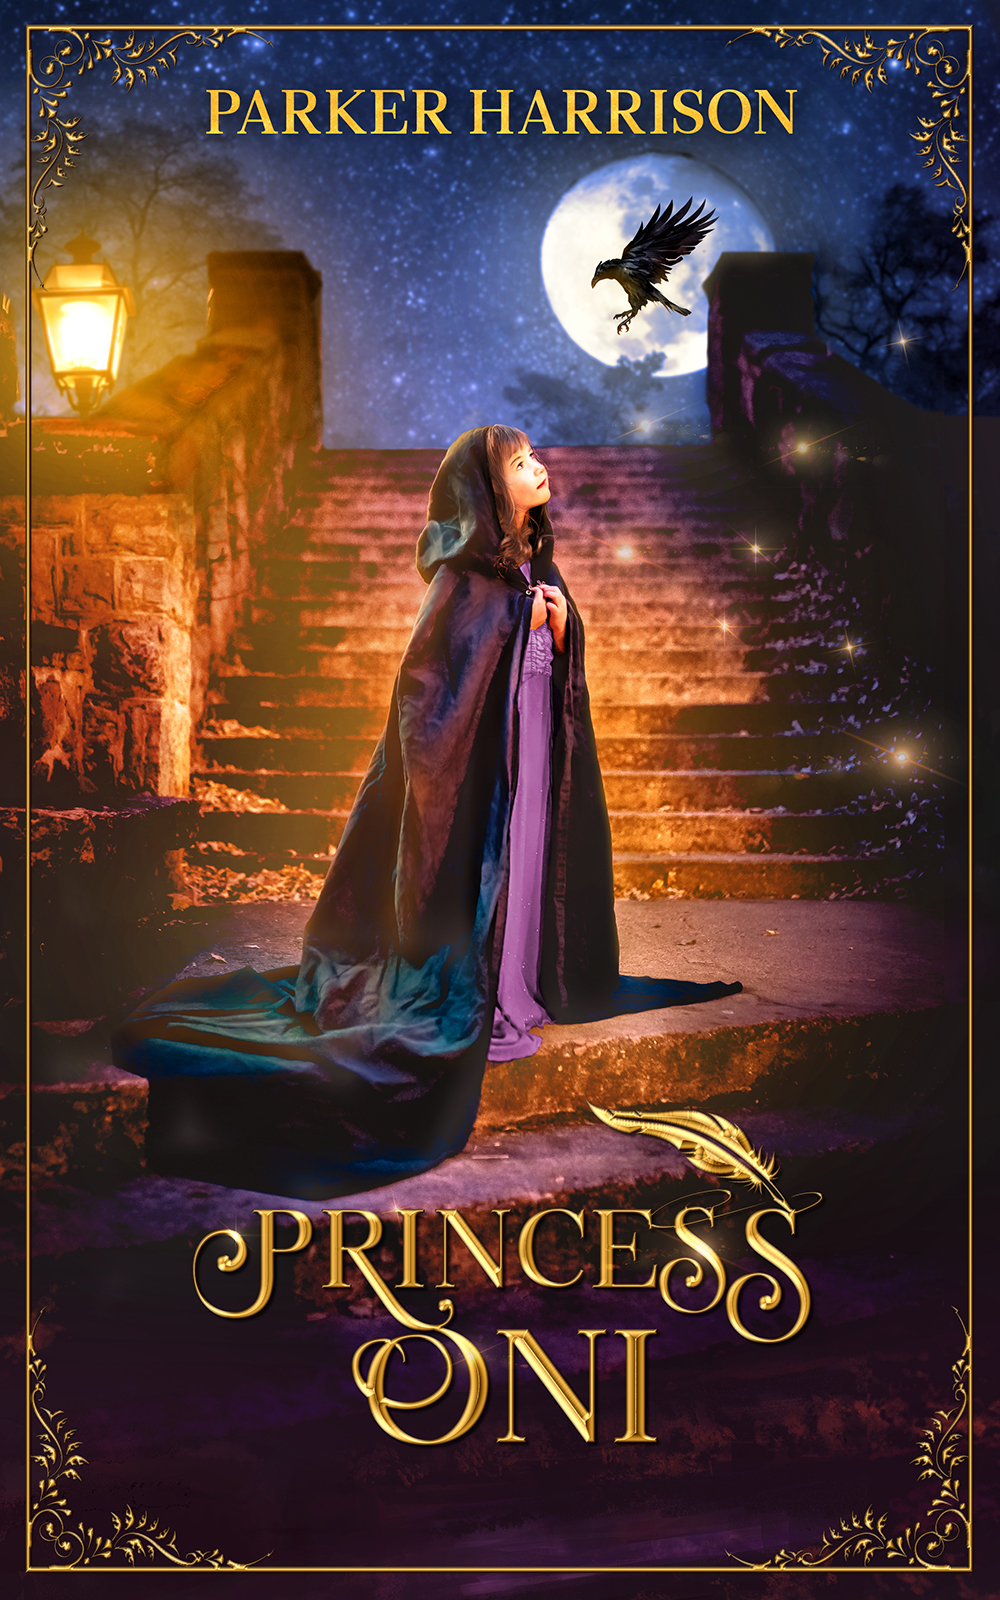 Coming Soon: Princess Oni